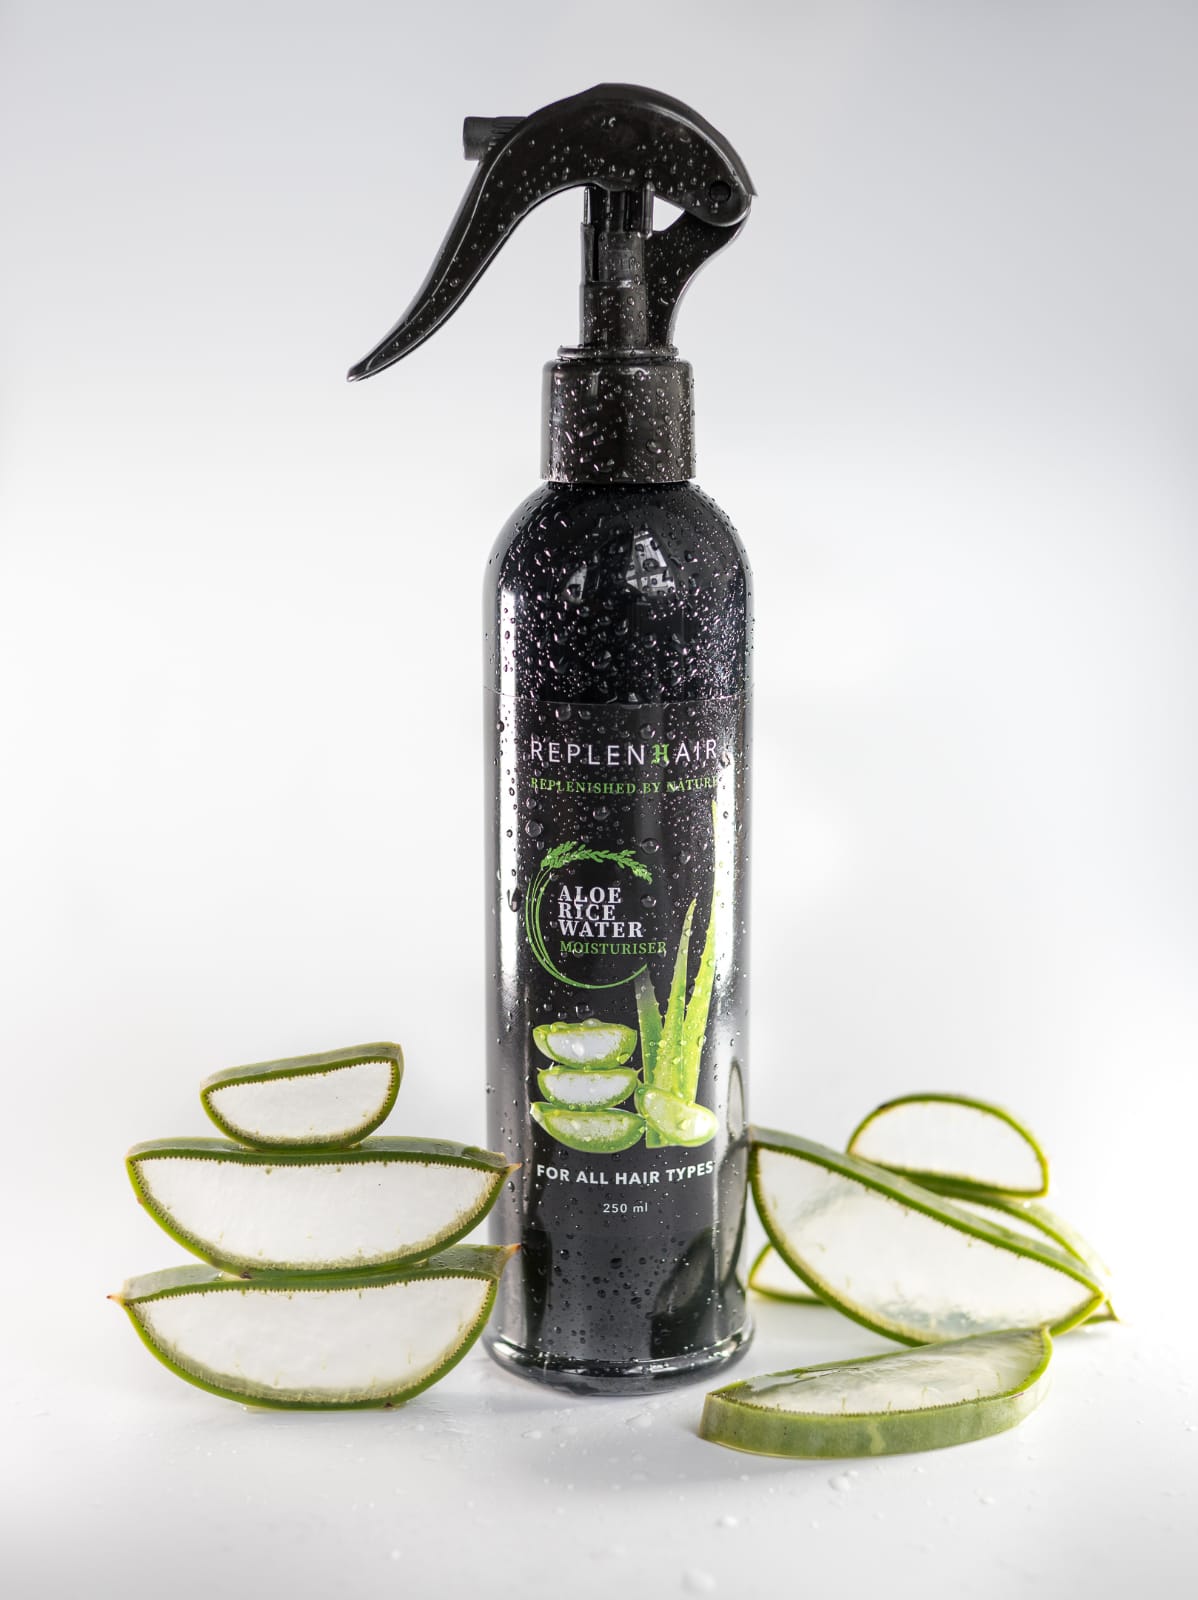 Aloe Rice Water Hair Moisturiser Spray